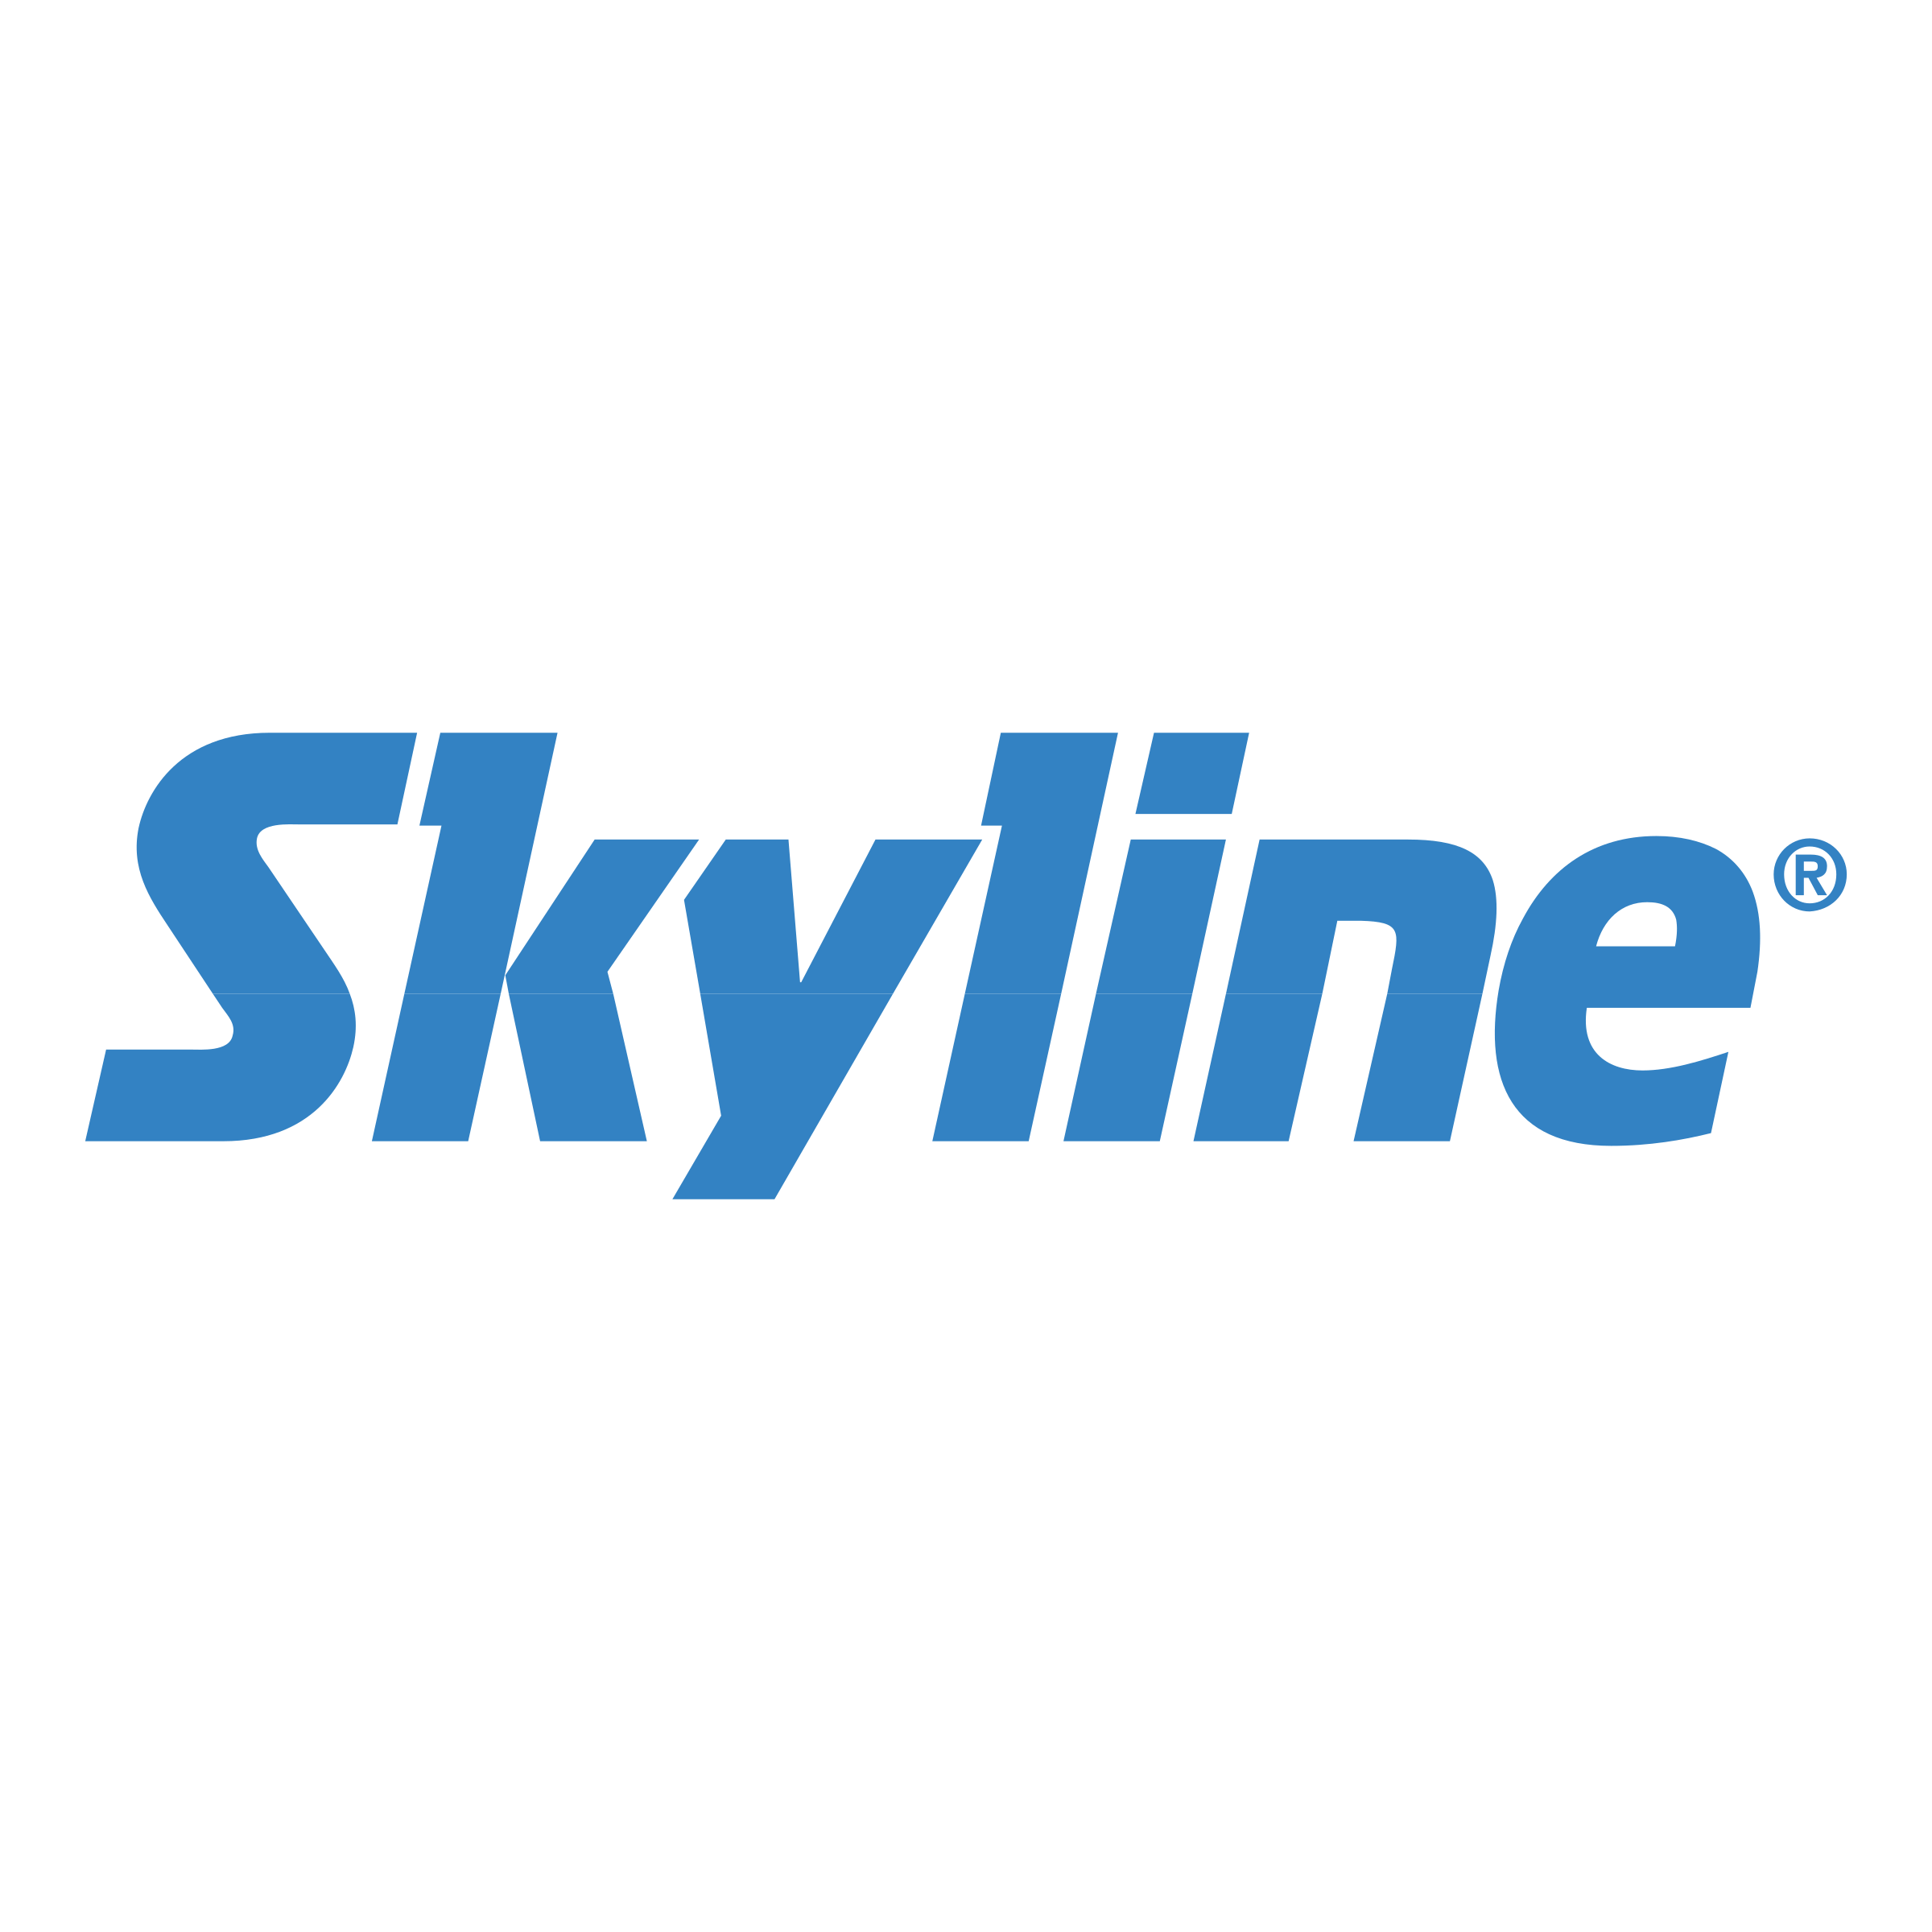 Skyline Logo - Skyline Logo PNG Transparent & SVG Vector - Freebie Supply